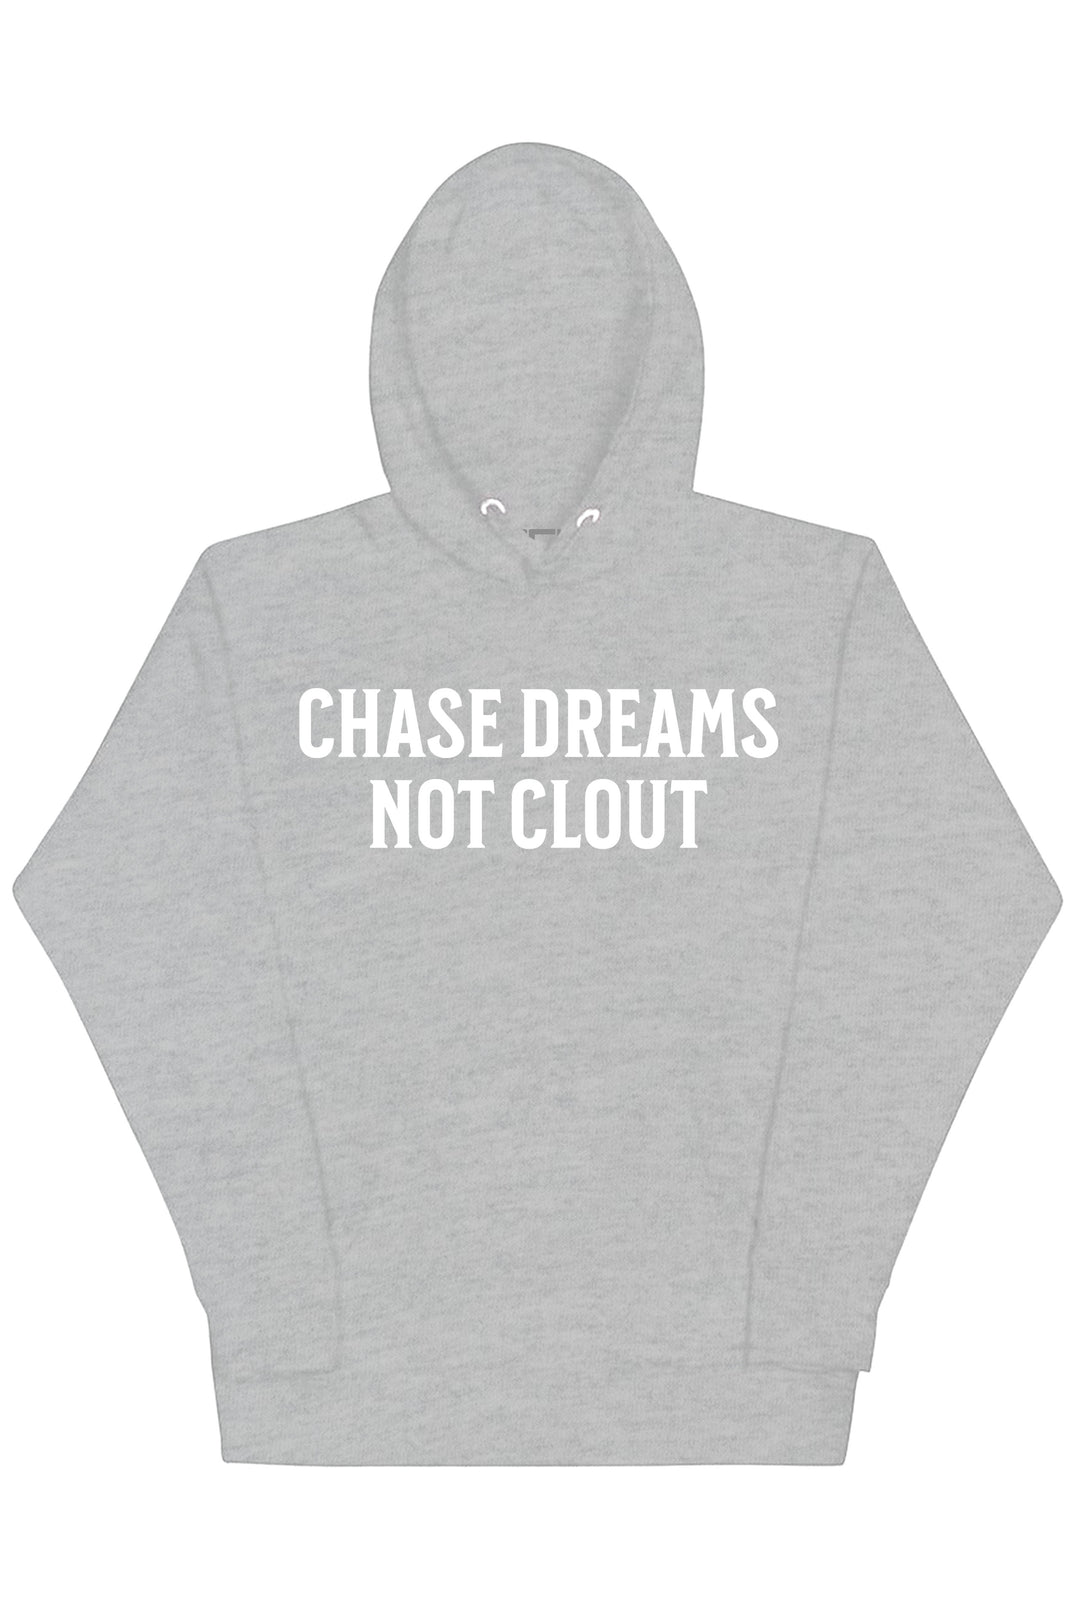 Chase Dreams Not Clout Hoodie (White Logo) - Zamage